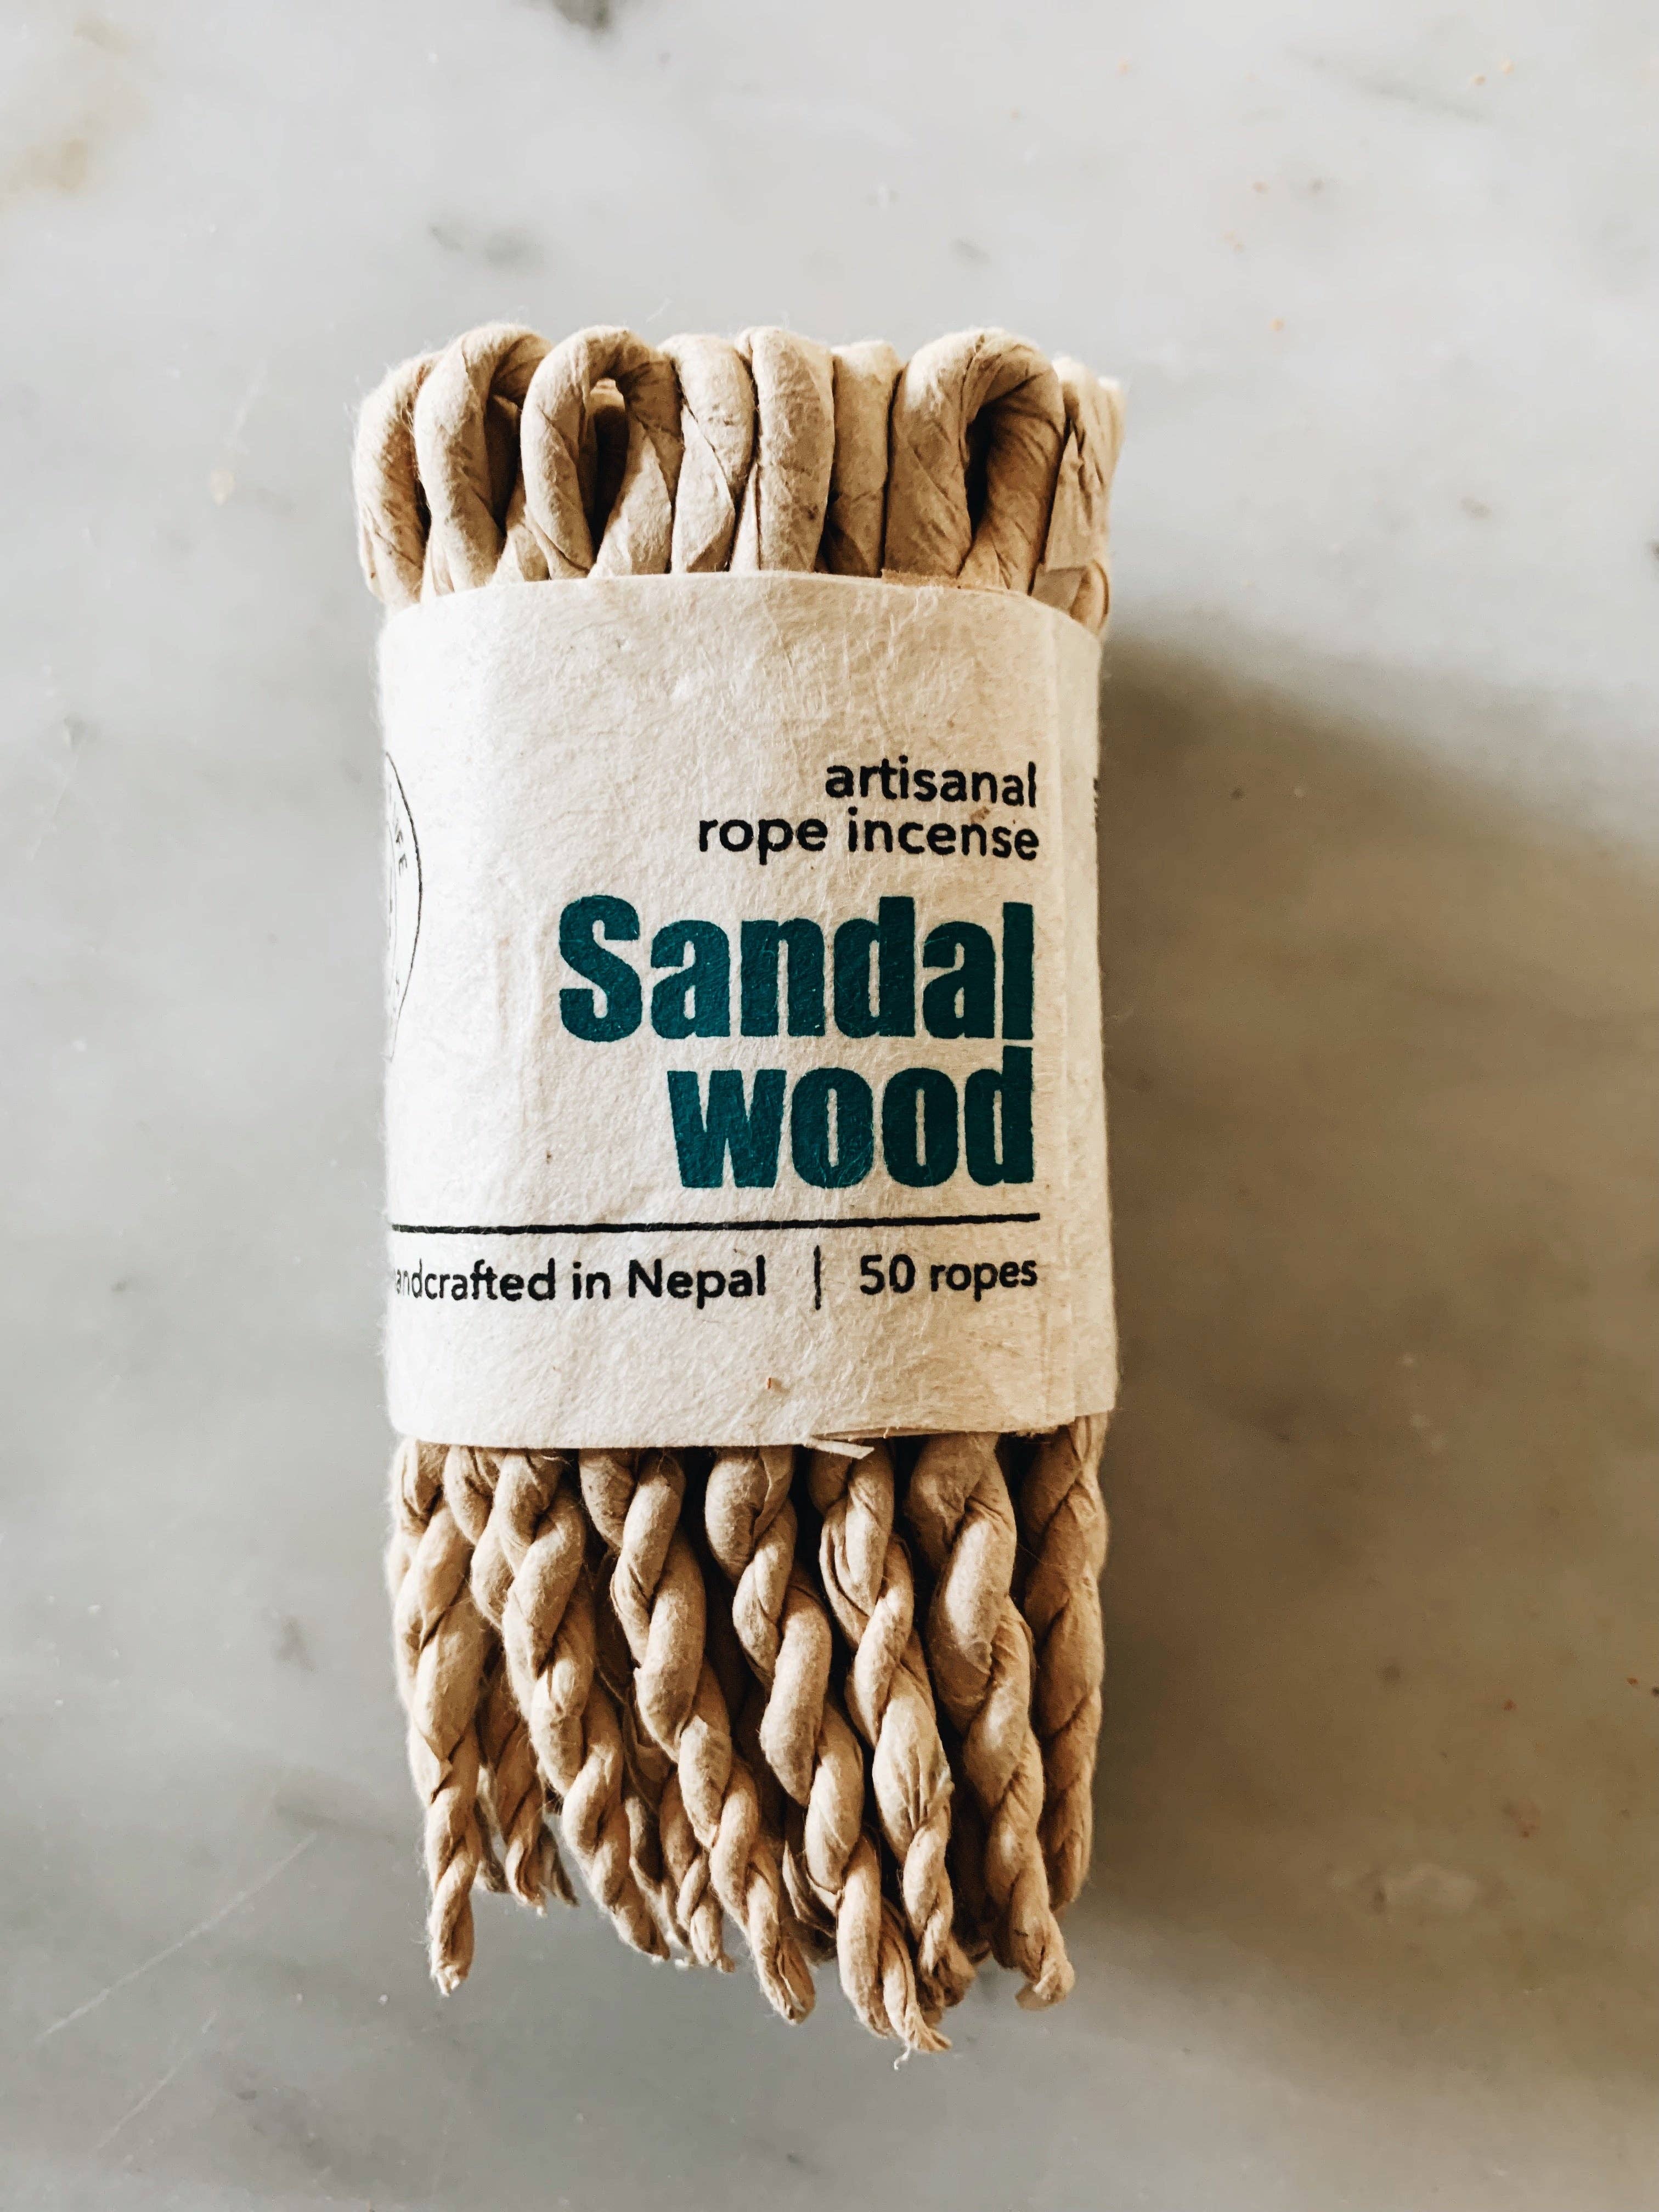 Essence of Life - Handcrafted 100% Natural Artisanal Rope incense, Sandalwood